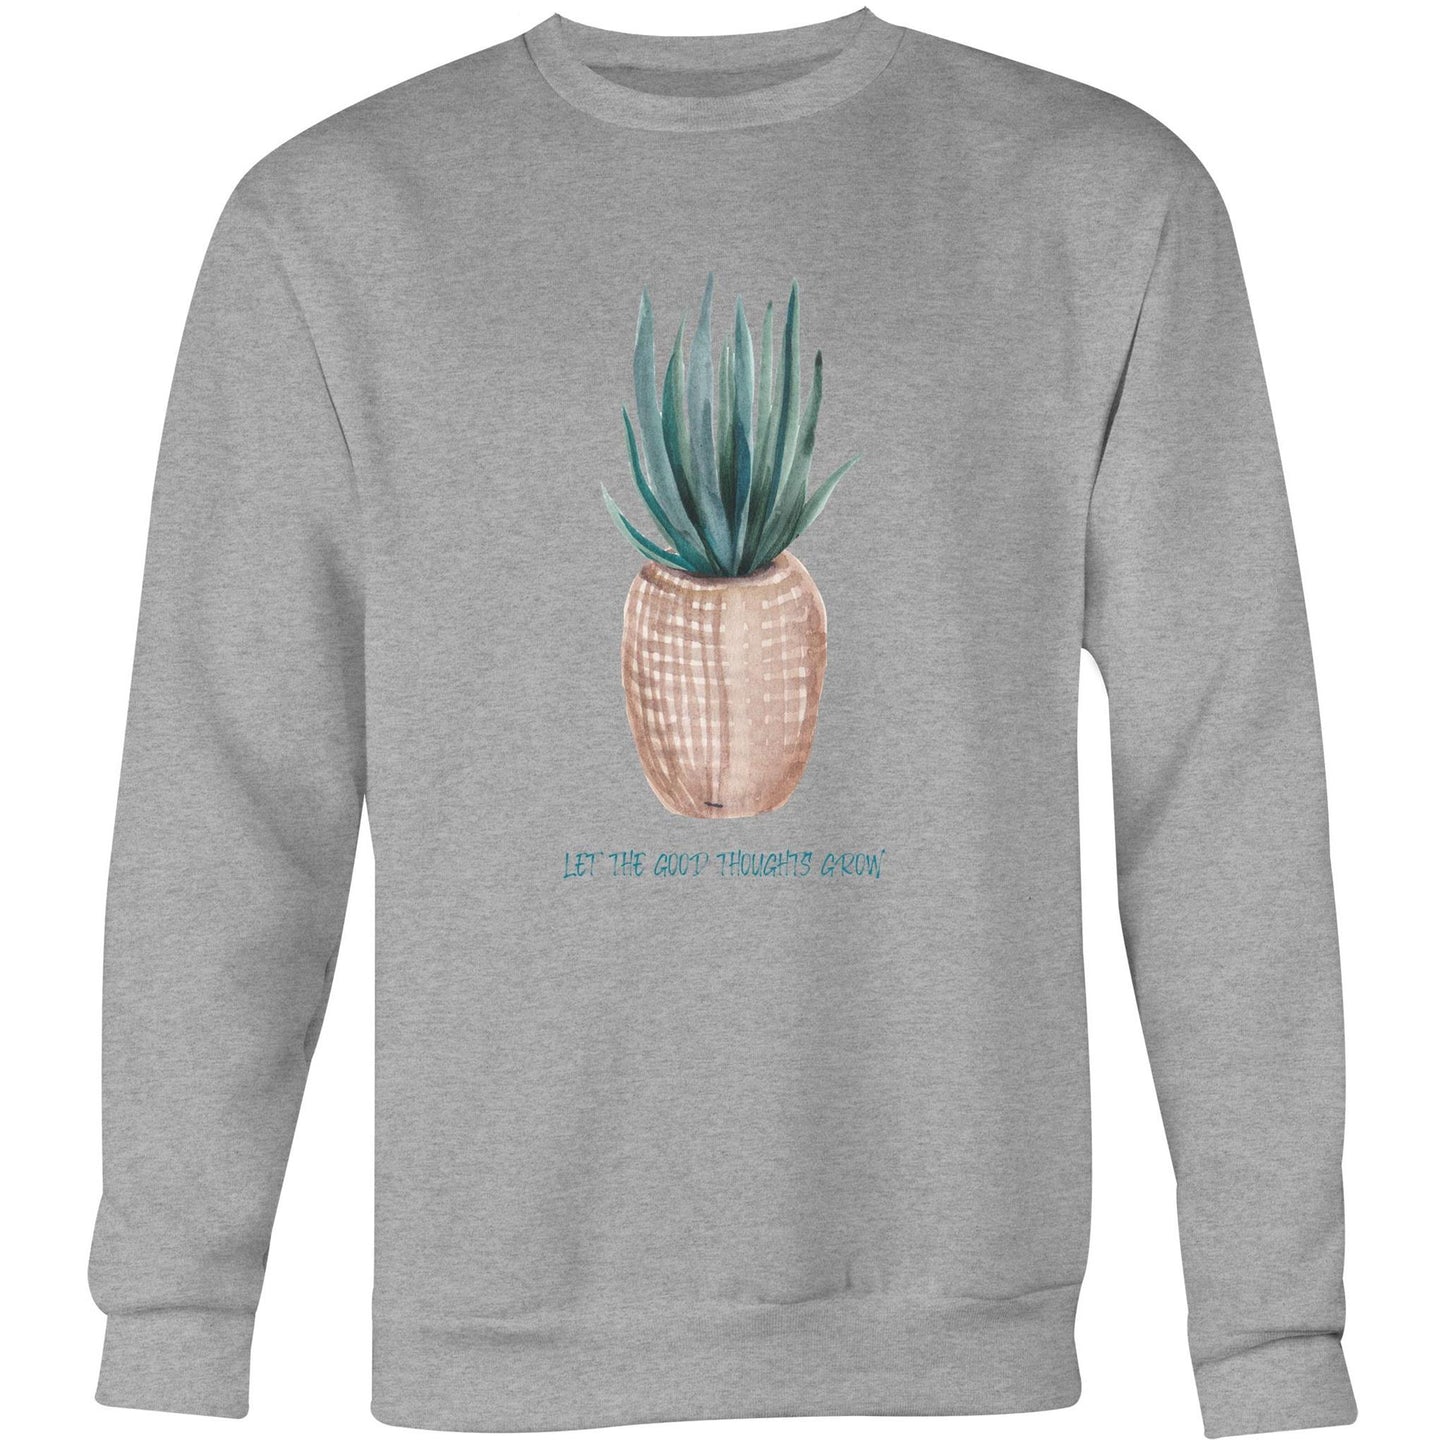 Let The Good Thoughts Grow - Crew Sweatshirt Grey Marle Sweatshirt Mens Plants Womens